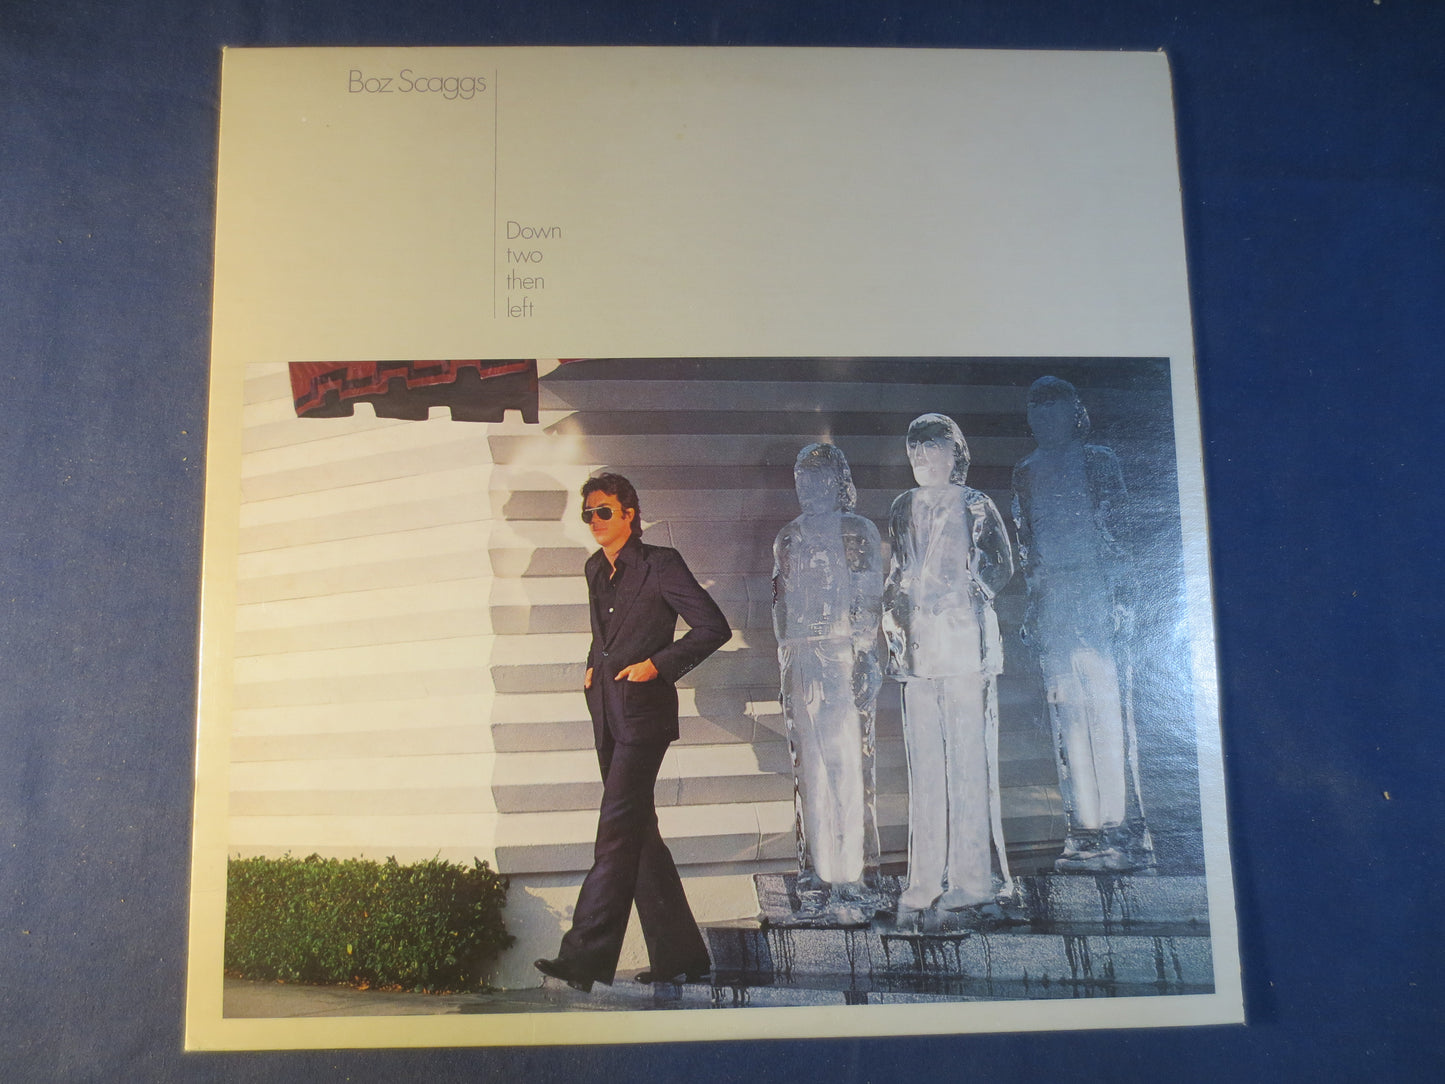 BOZ SCAGGS, Down Two Then Left, Rock Records, Vintage Vinyl, Records, Vinyl, Vinyl Records, Vinyl Albums, 1977 Records